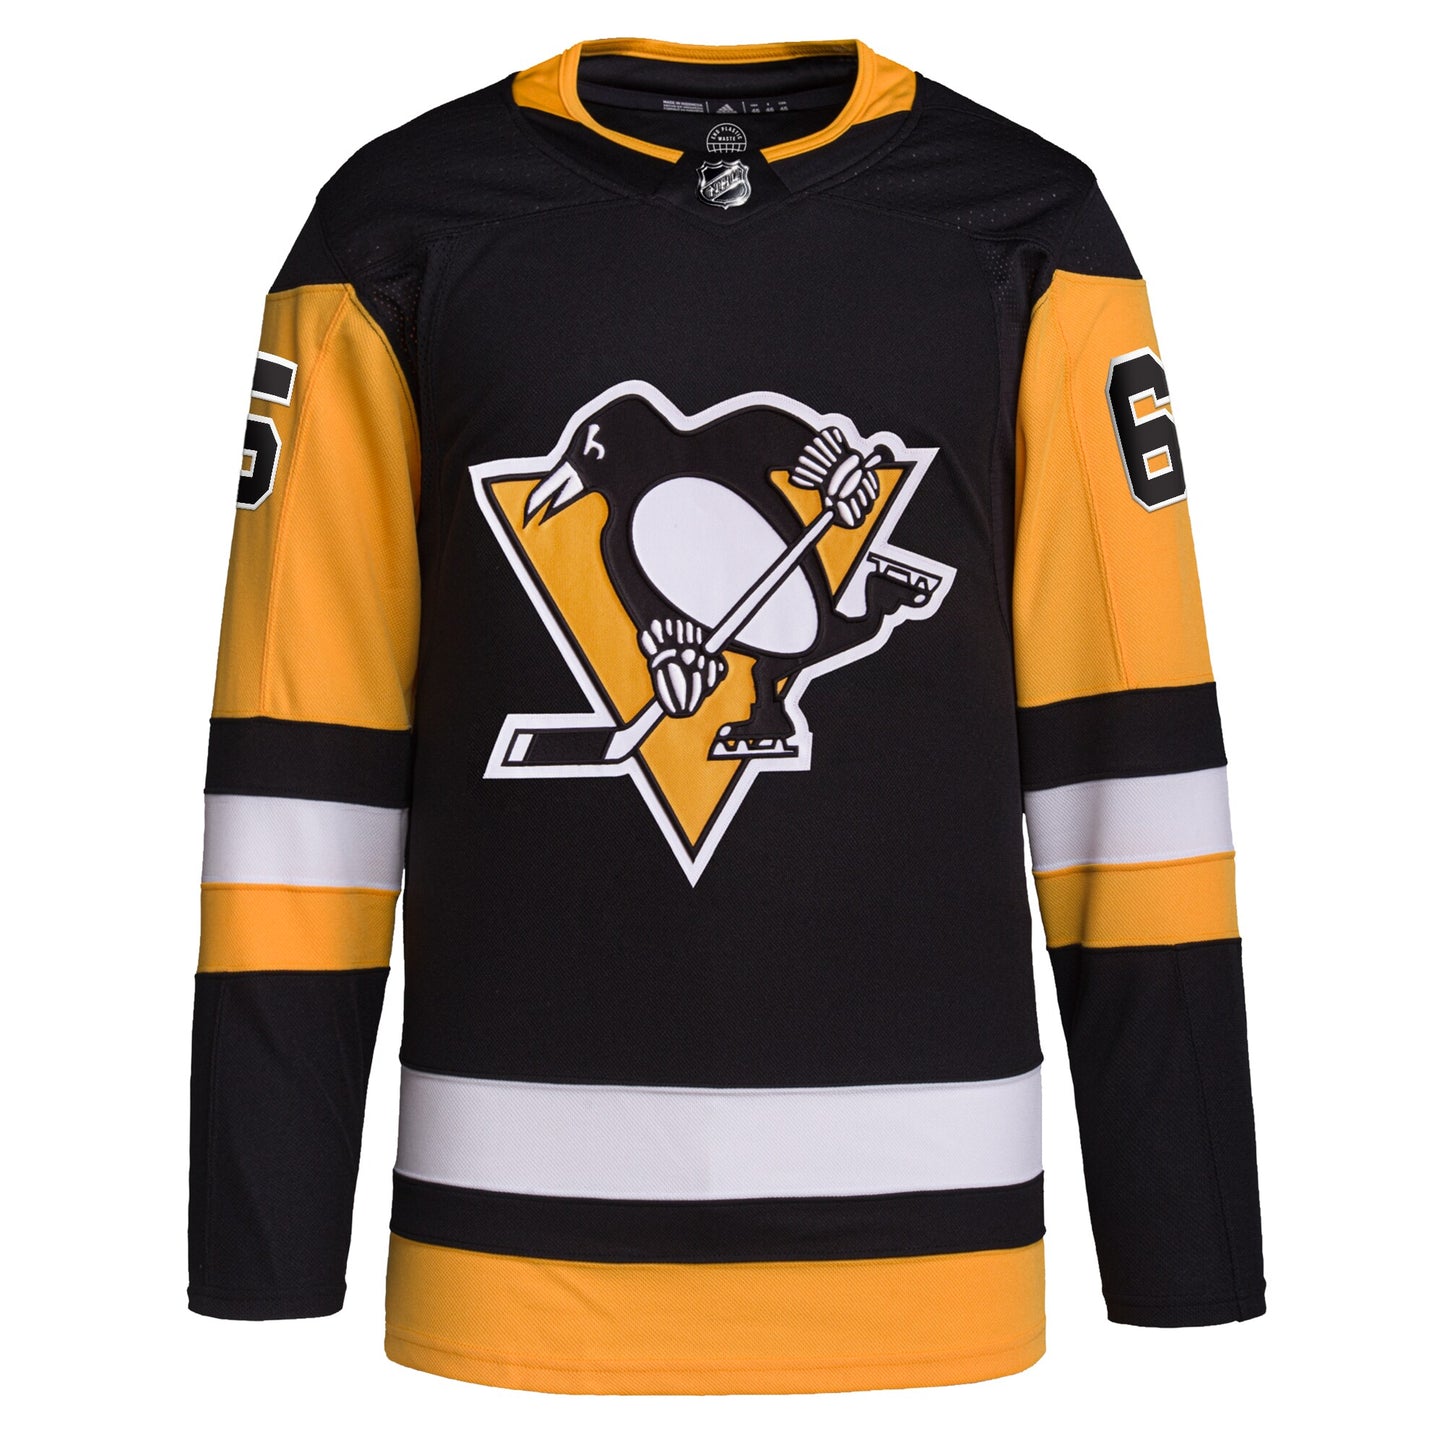 Erik Karlsson Pittsburgh Penguins adidas Home Primegreen Authentic Pro Player Jersey - Black